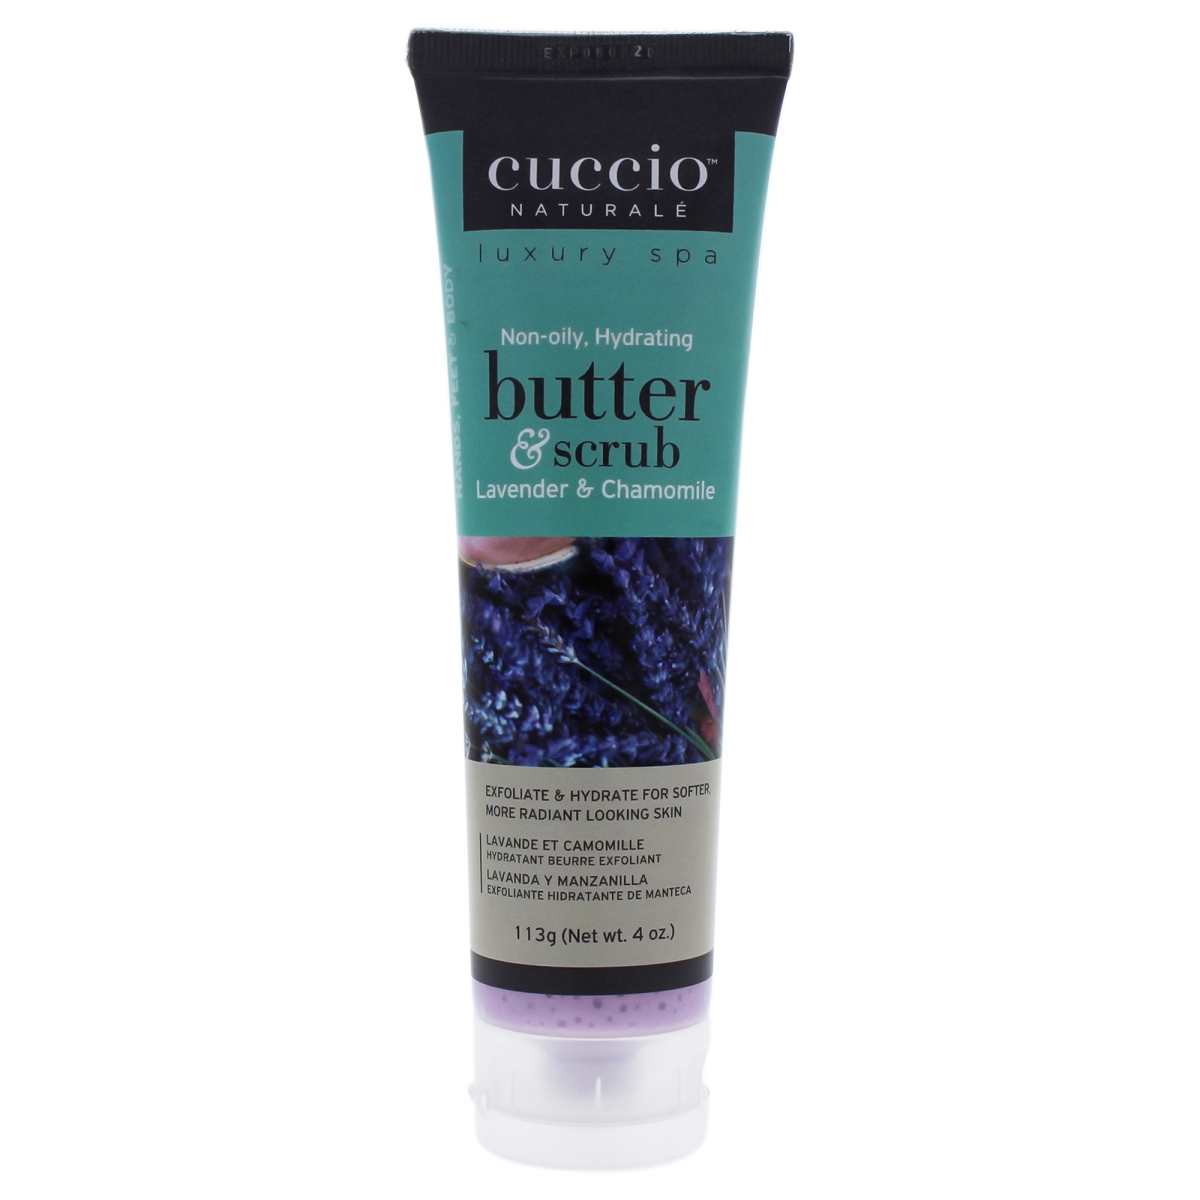 I0090893 Butter & Scrub For Unisex - Lavender & Chamomile - 4 Oz